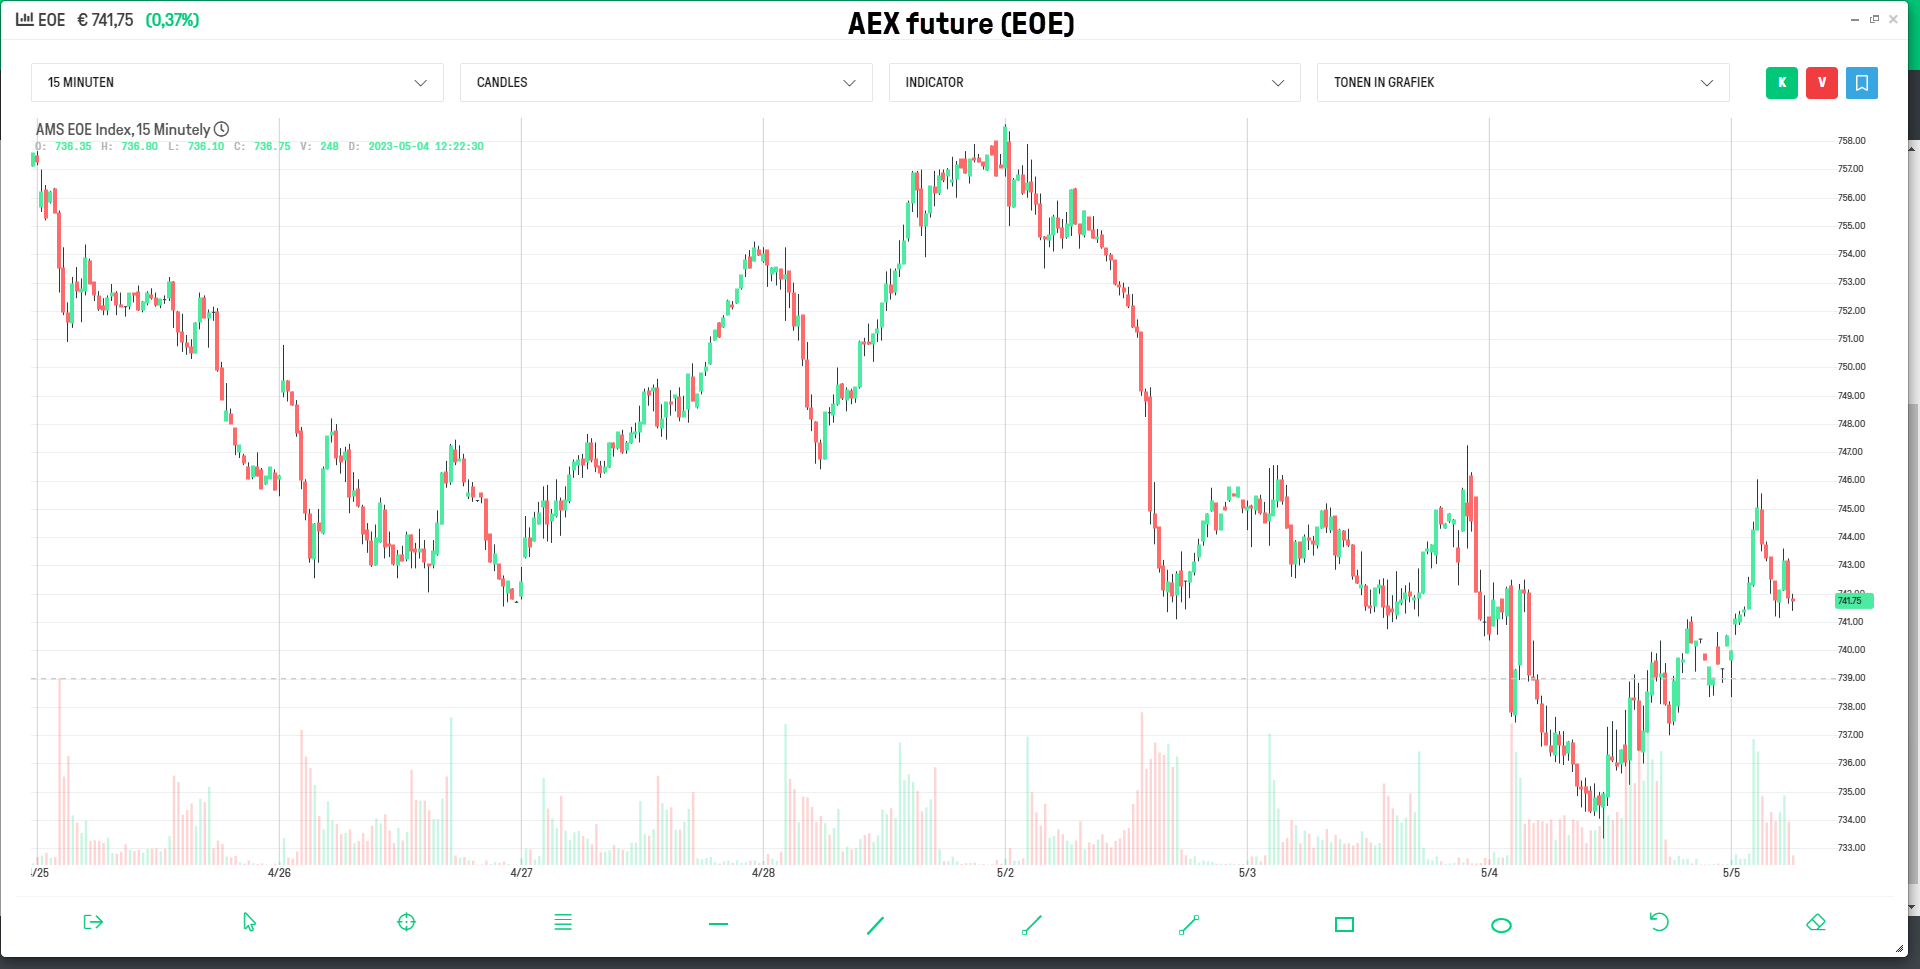 AEX future koers | AEX future chart | Beleggen in futures